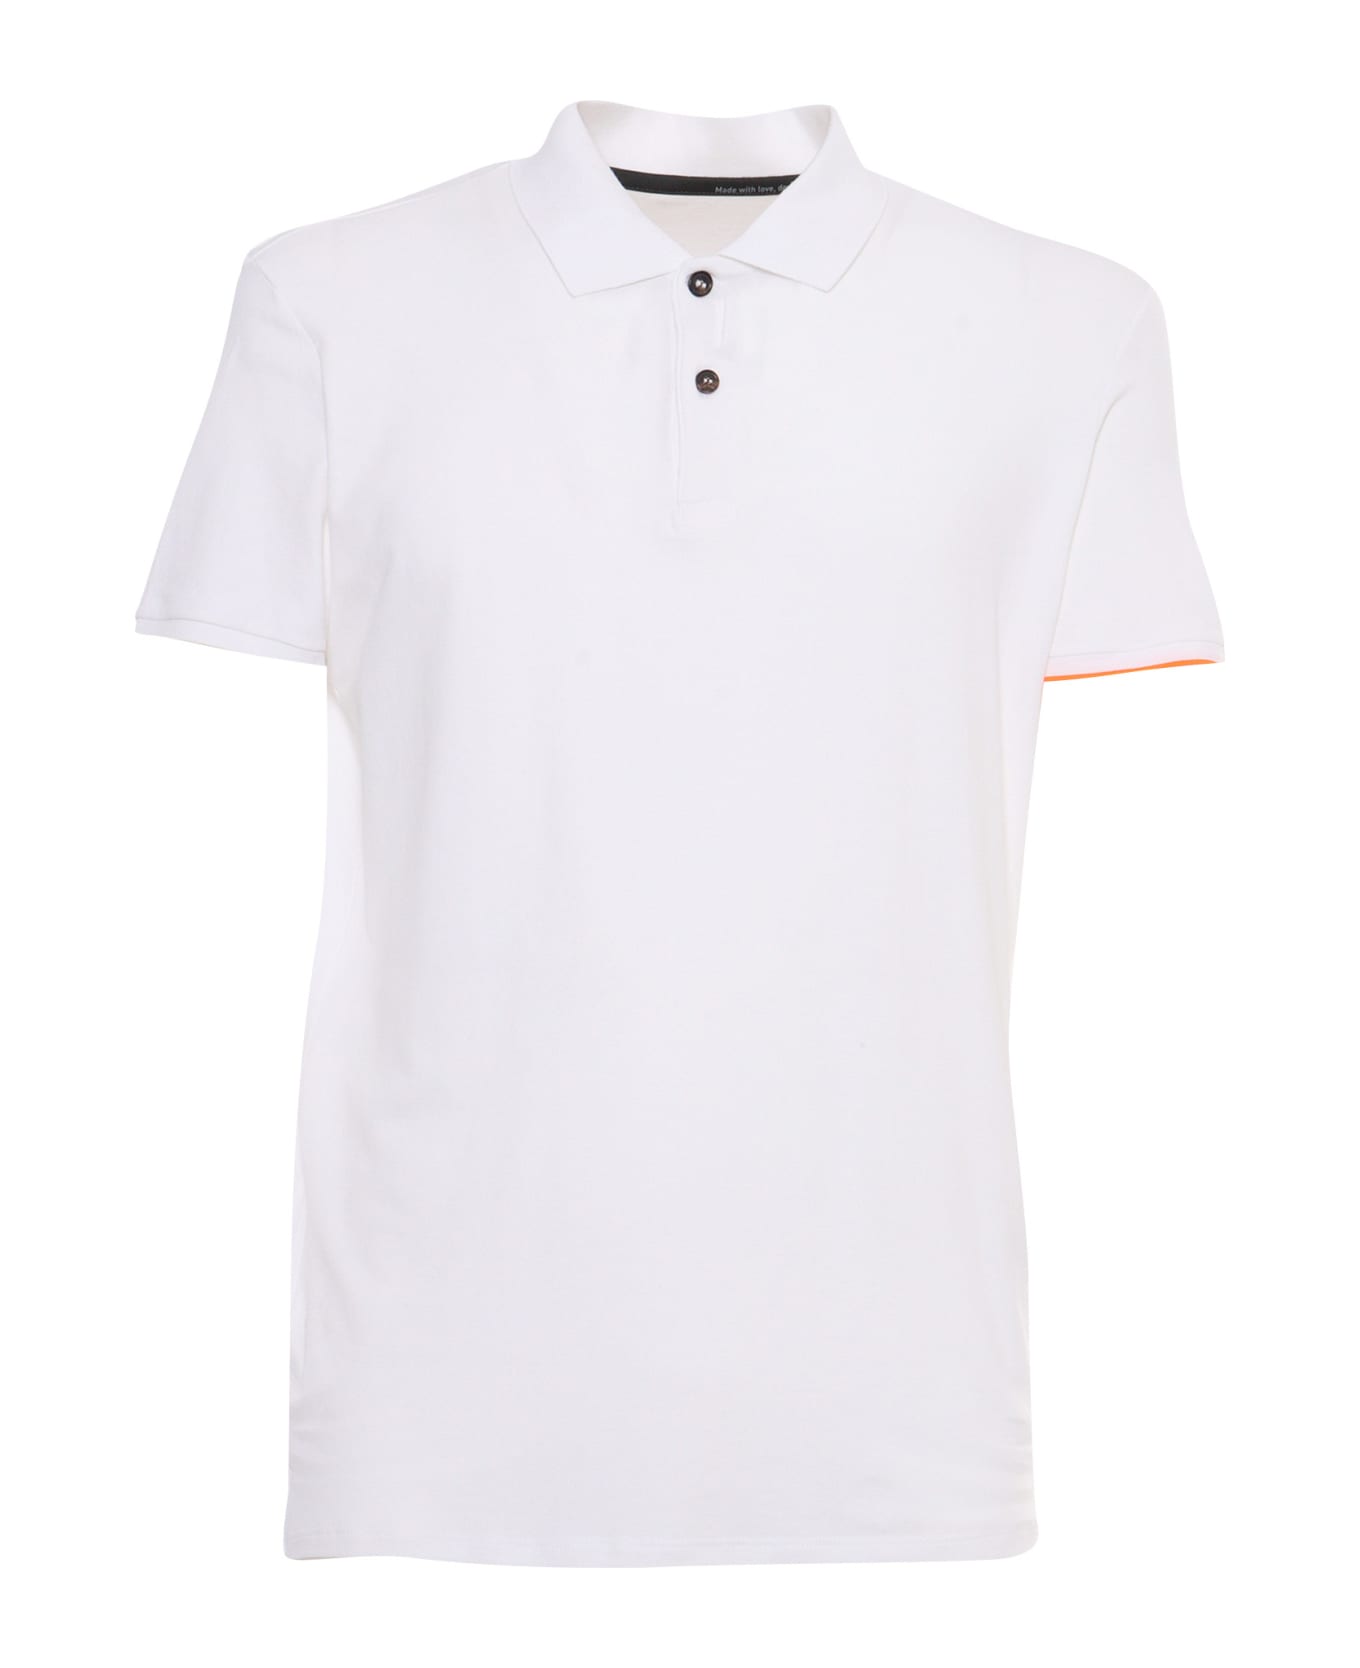 RRD - Roberto Ricci Design White Polo - WHITE ポロシャツ